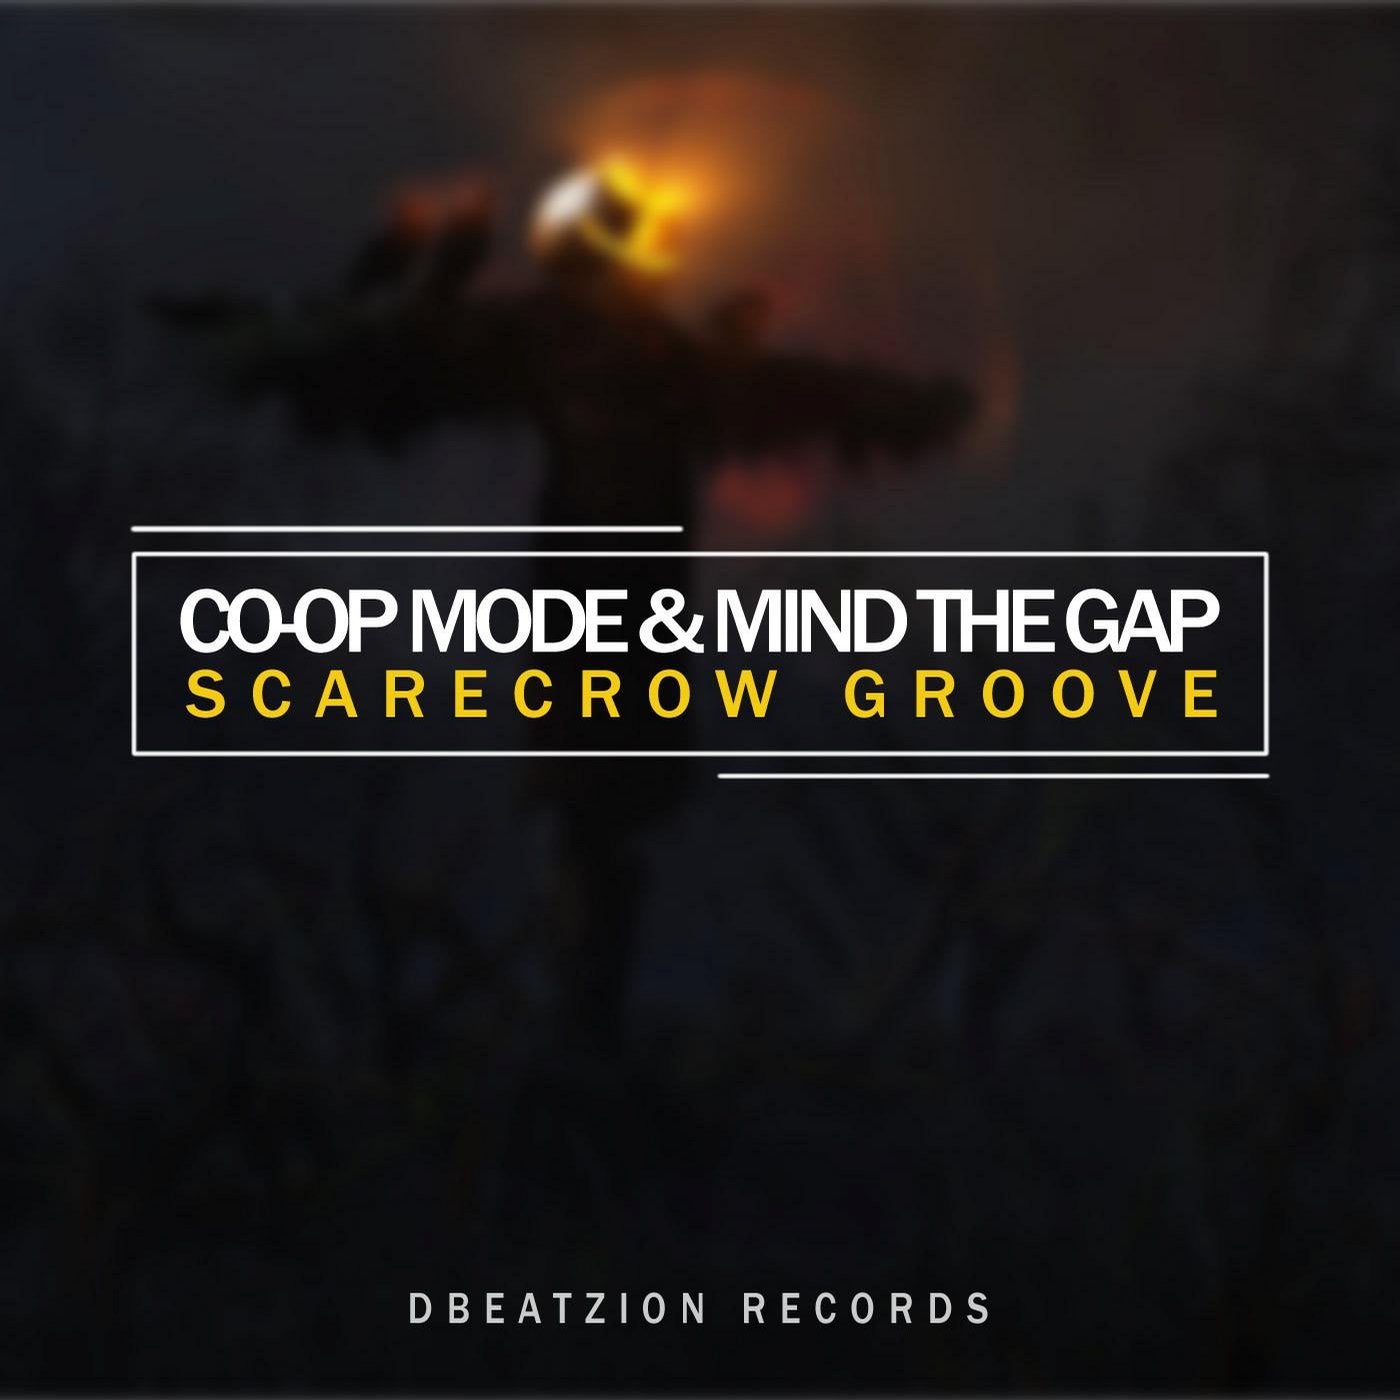 Scarecrow Groove